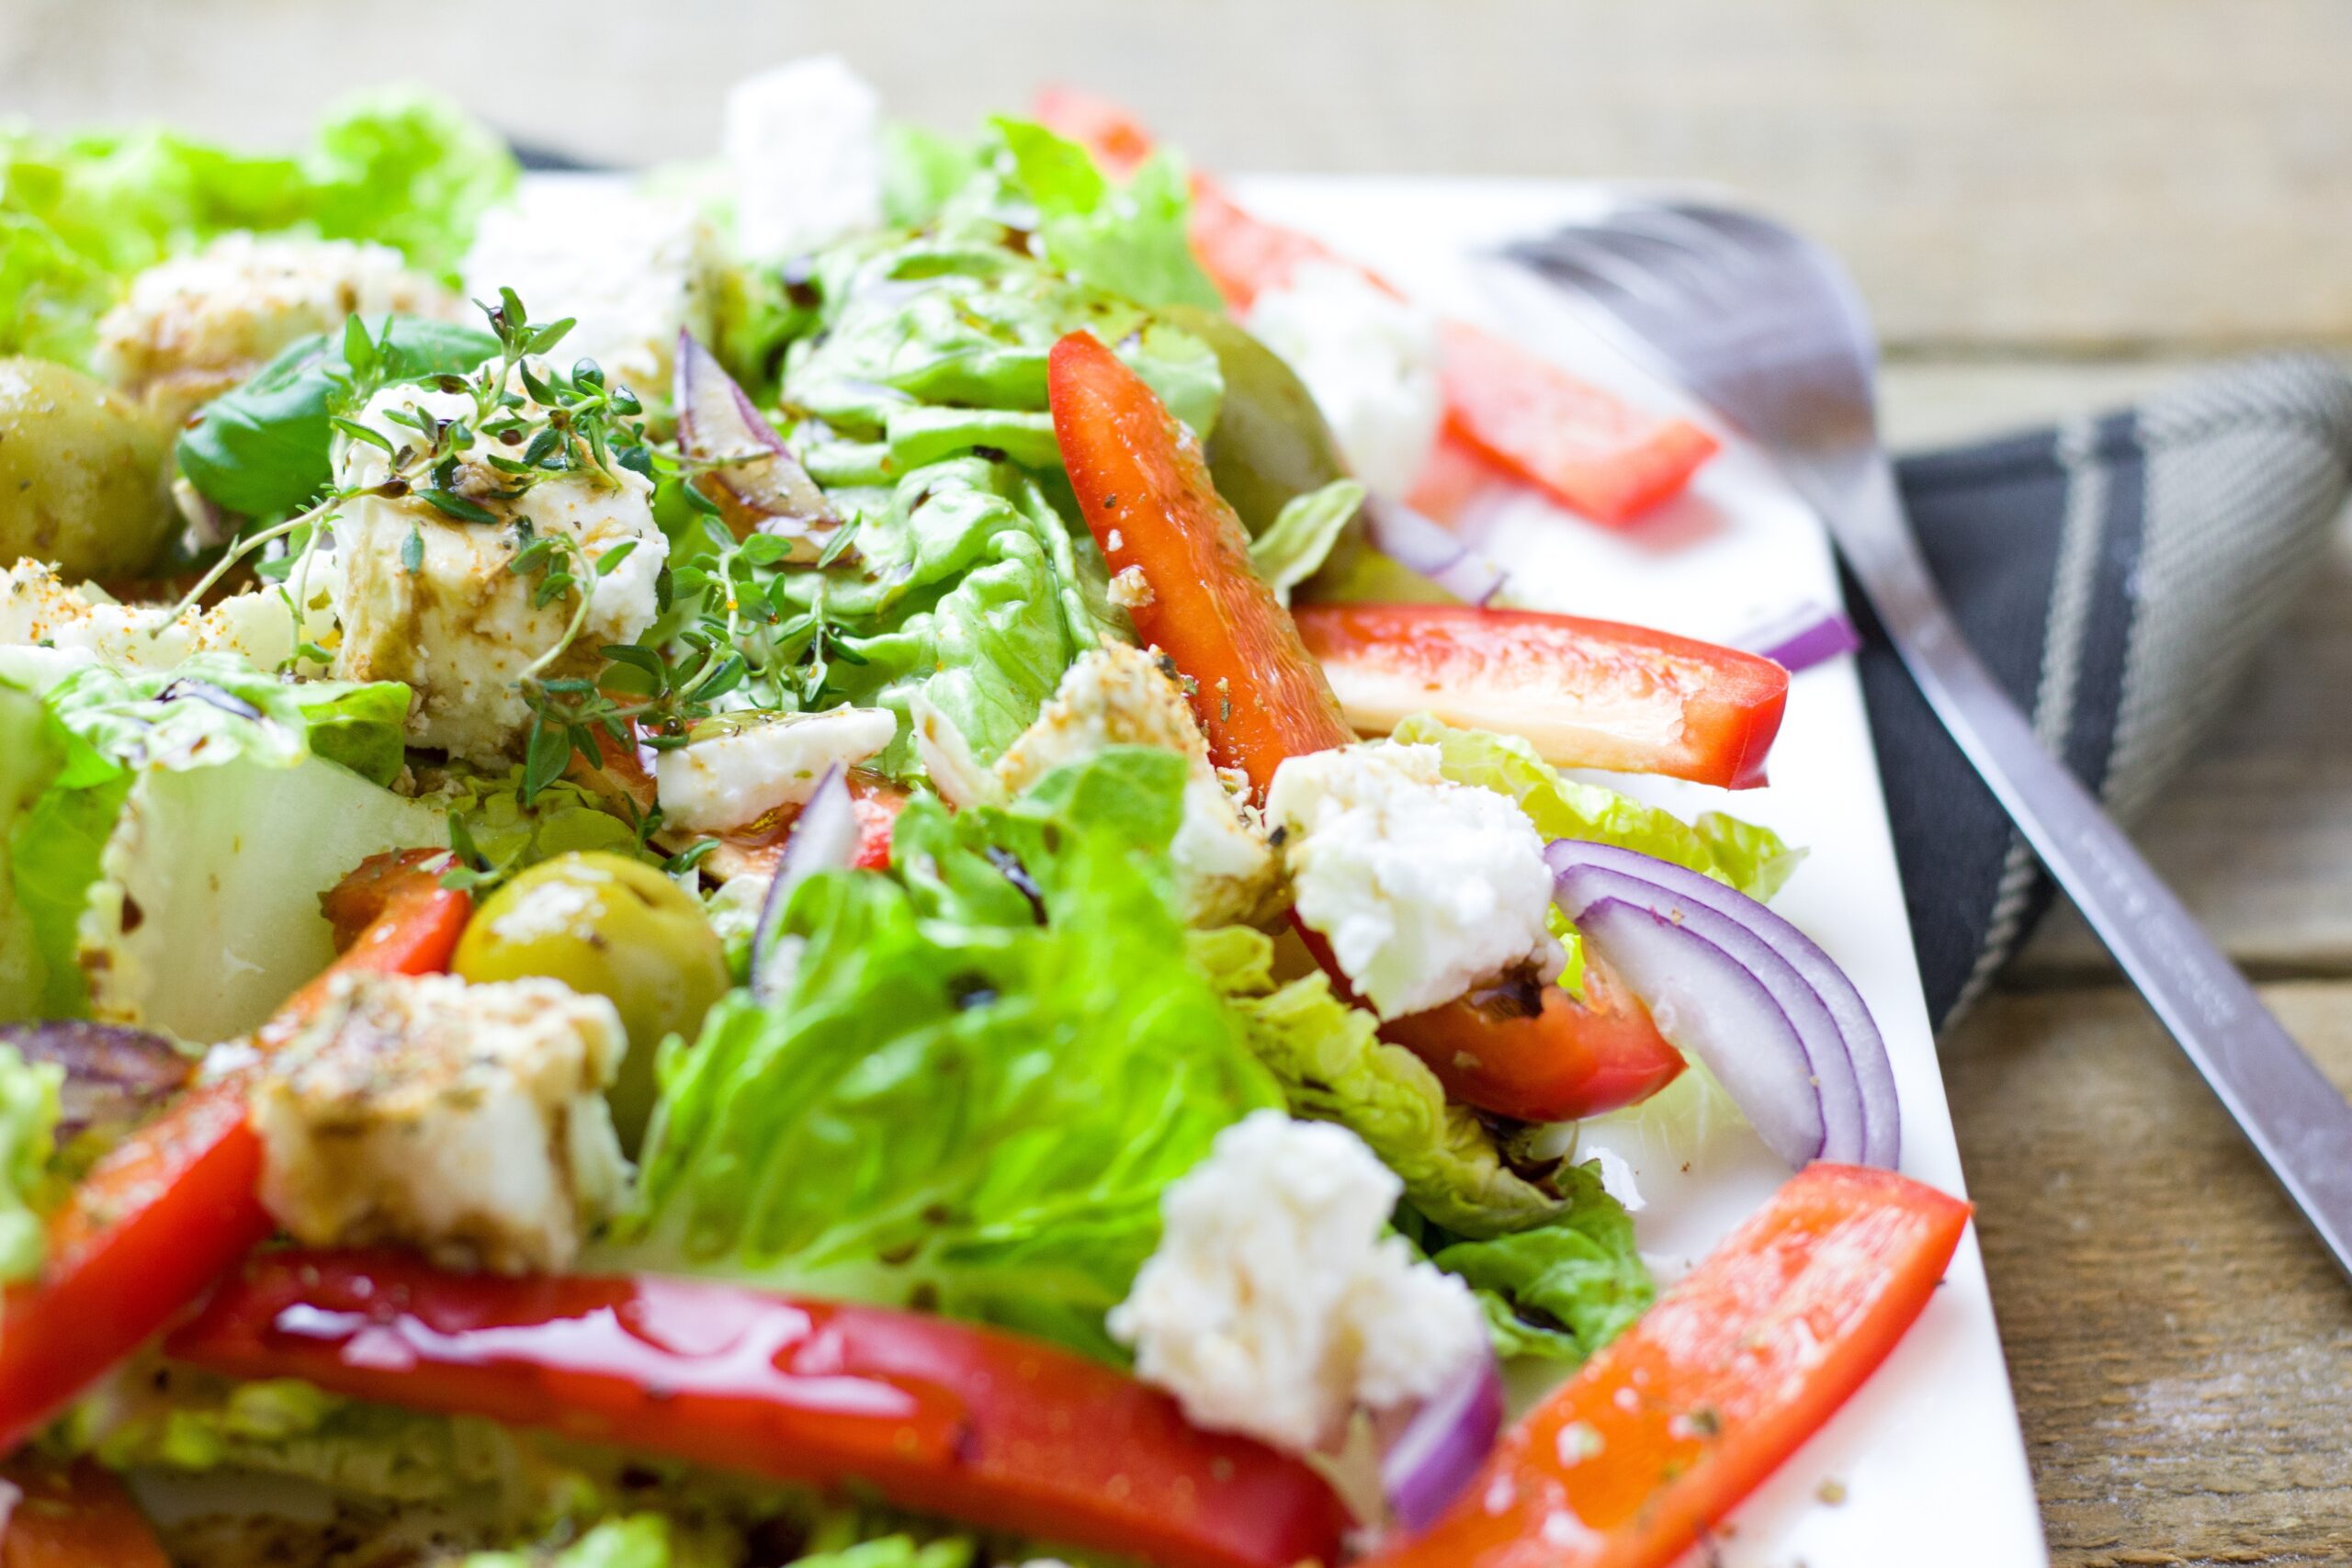 Je bekijkt nu Verfrissende Zomerse Salades om je smaakpapillen te verwennen